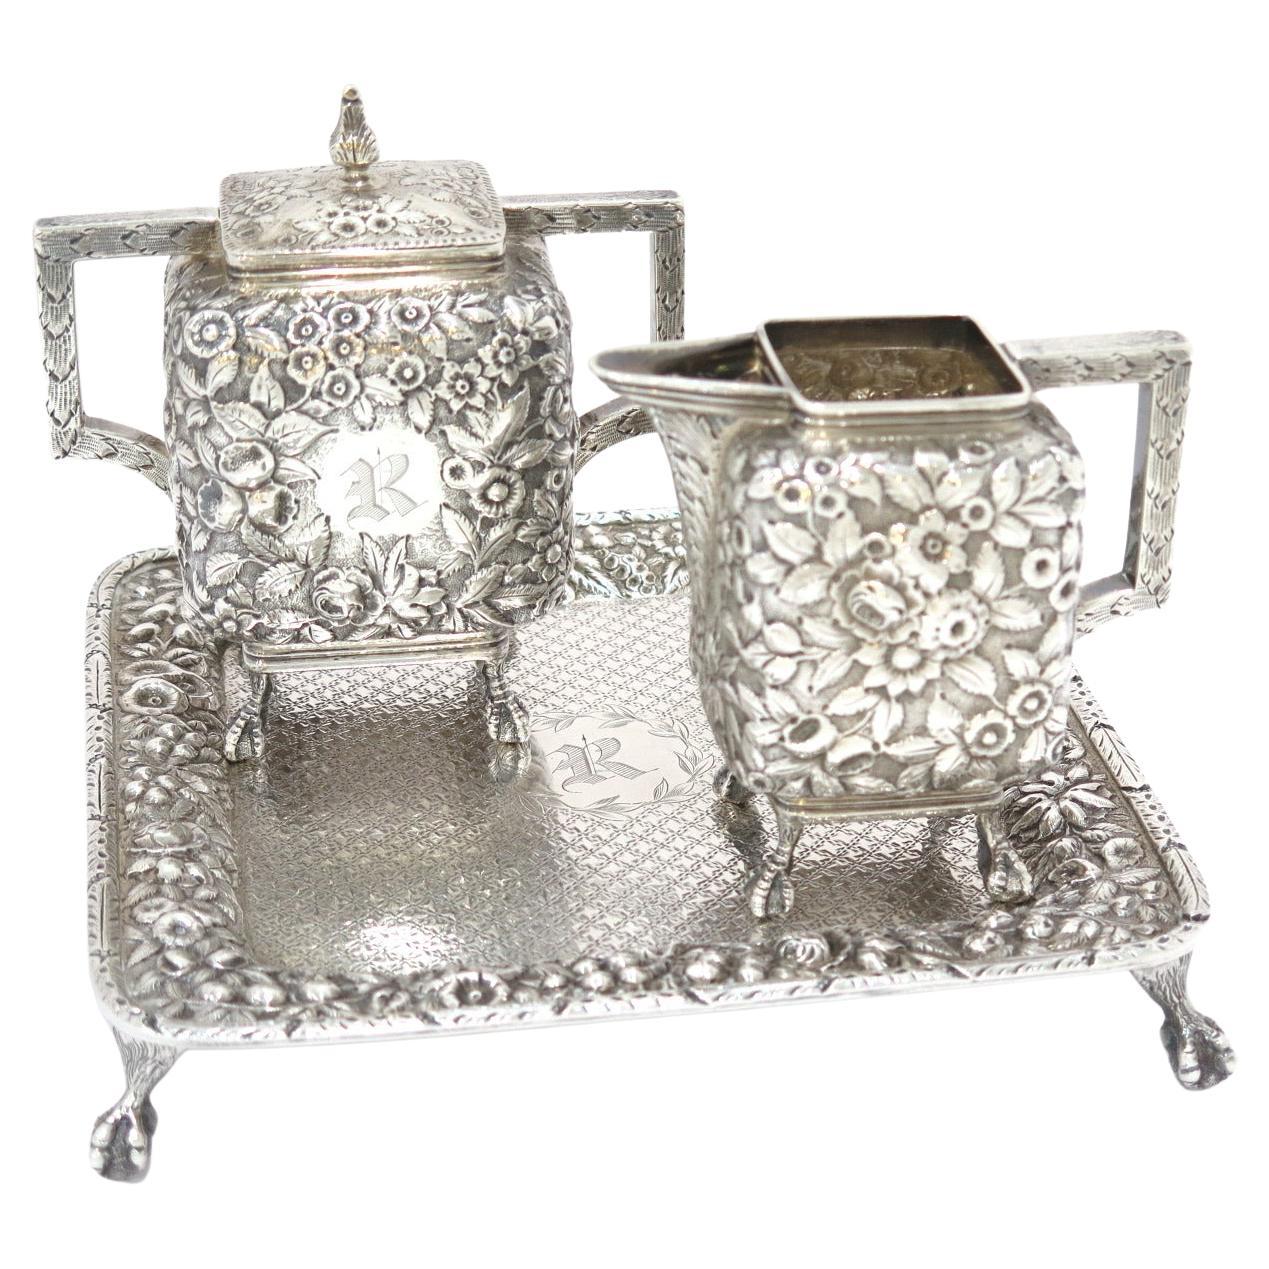 Coin Silver Antique American Floral Repousse Mini Sugar Bowl, Creamer & Tray Set